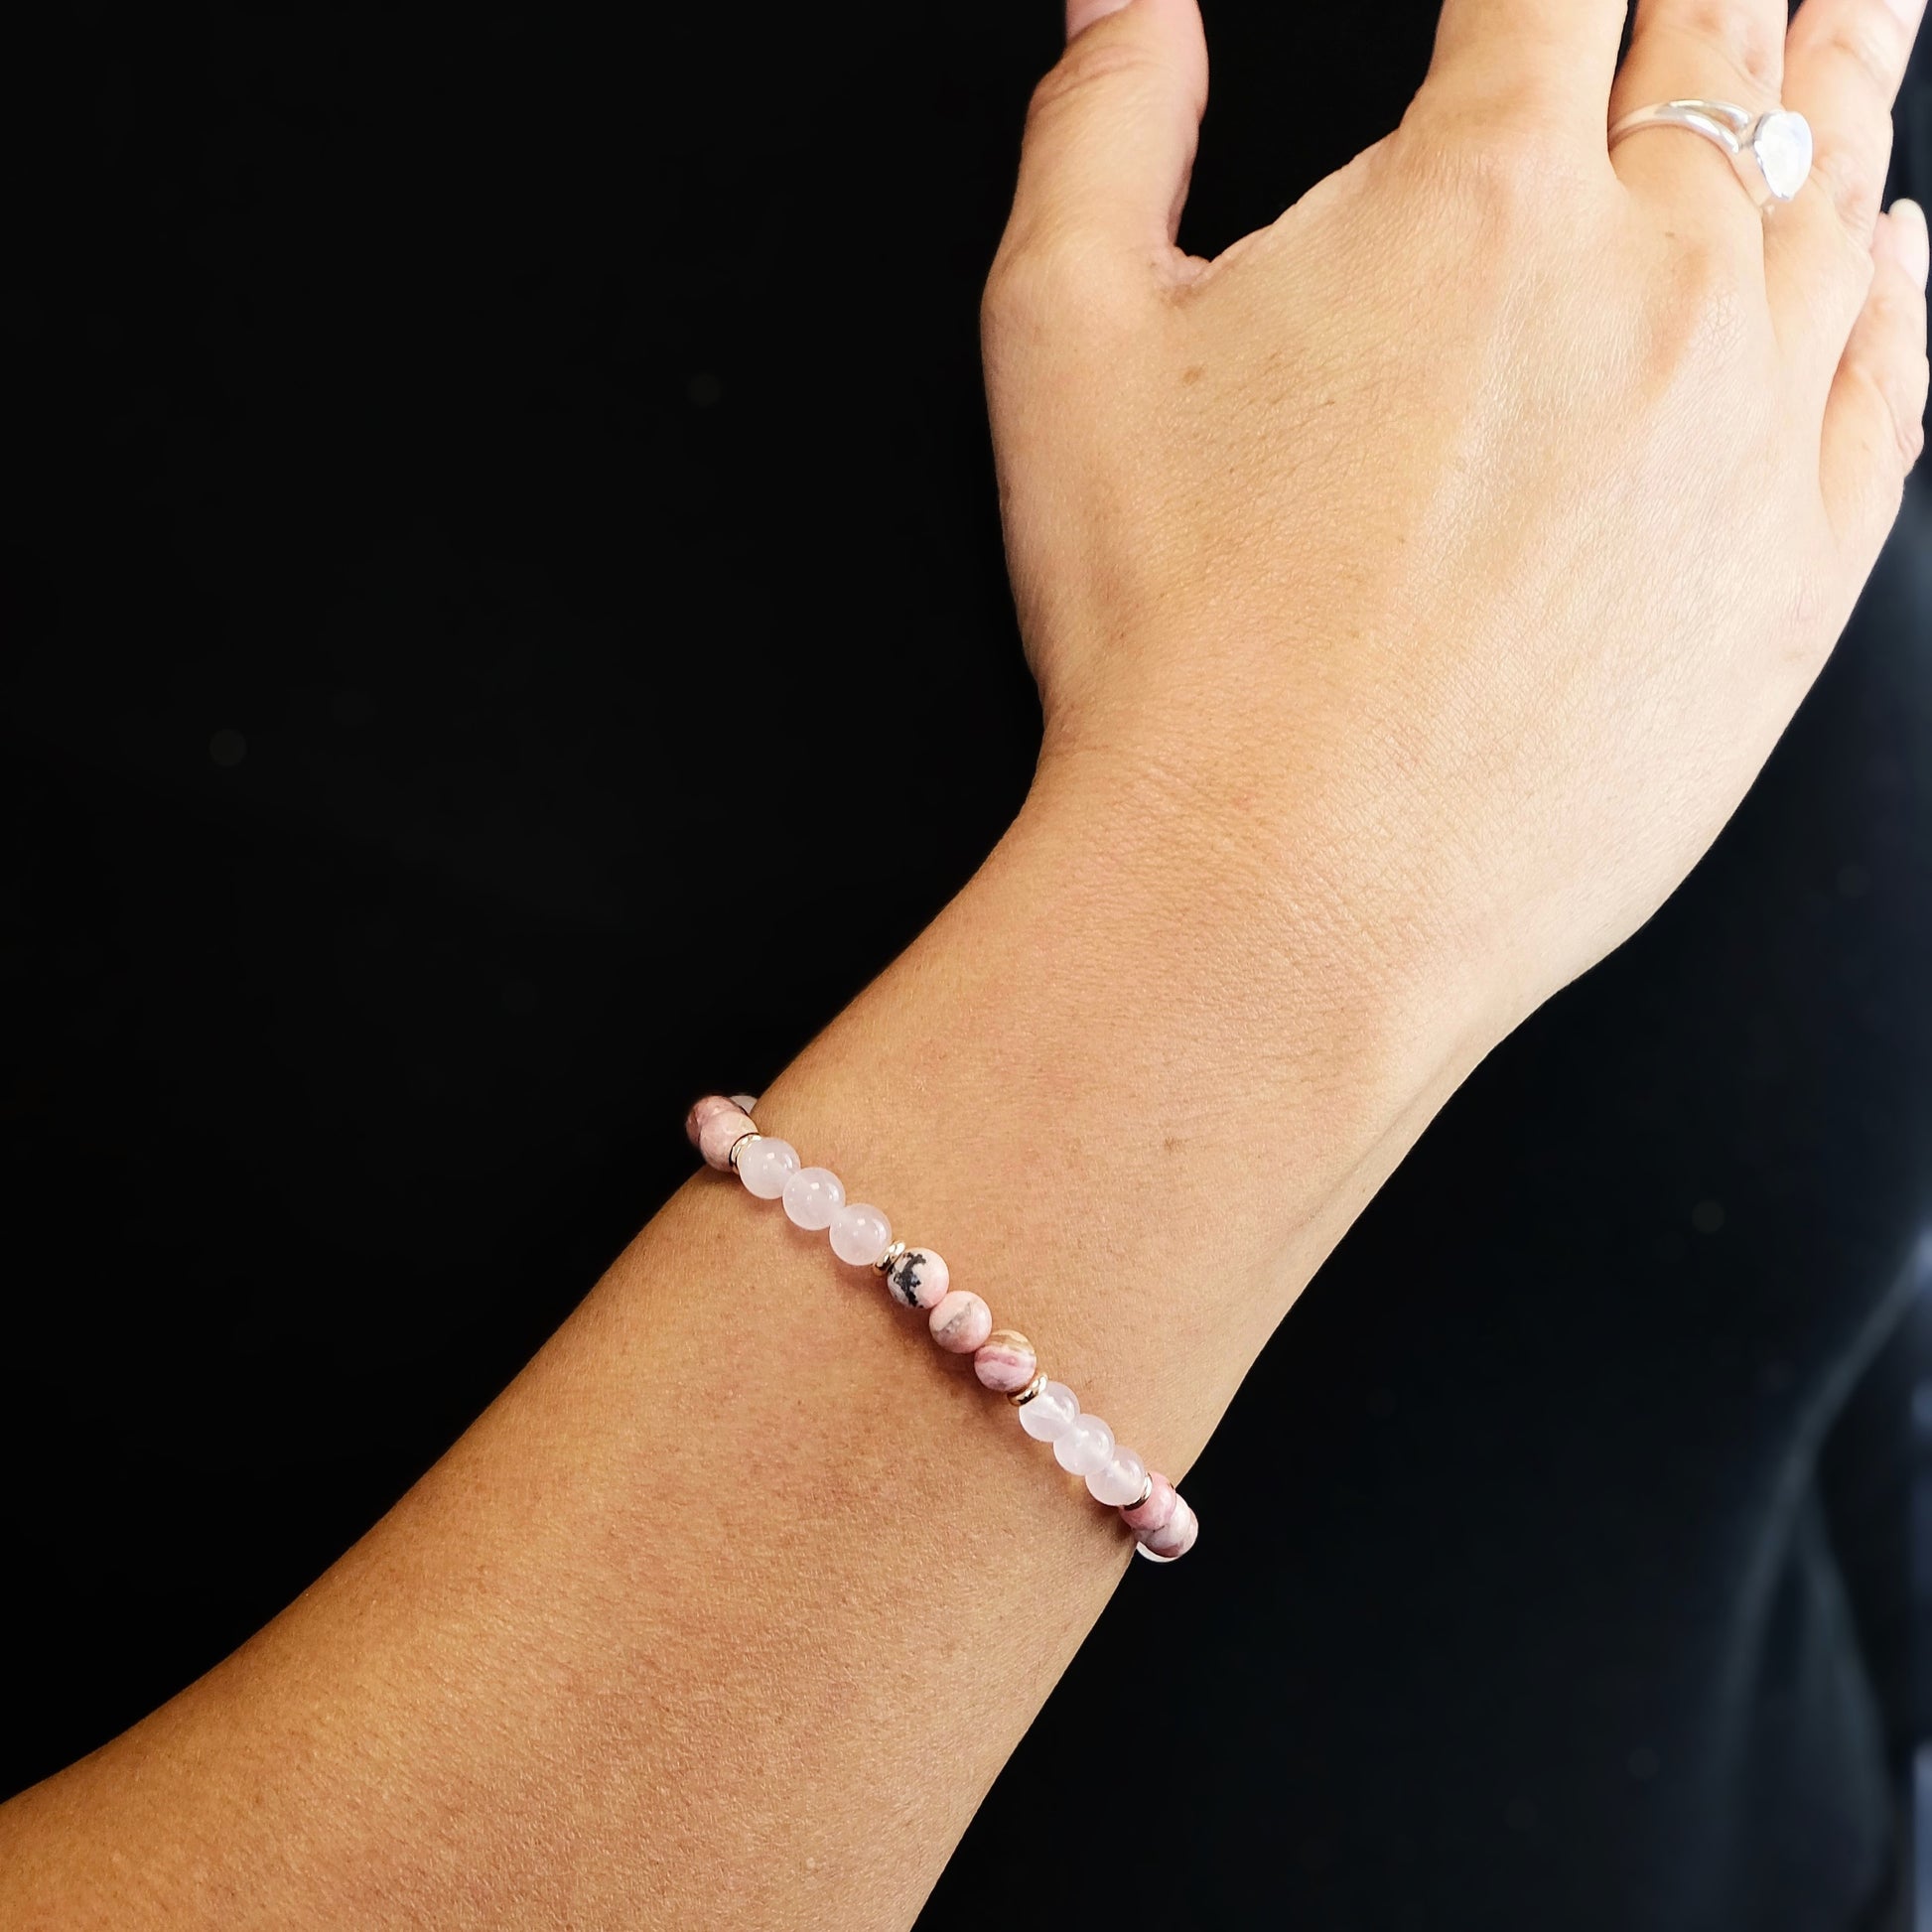 A model wearing a rhodochrosite and rose quartz gemstone bracelet